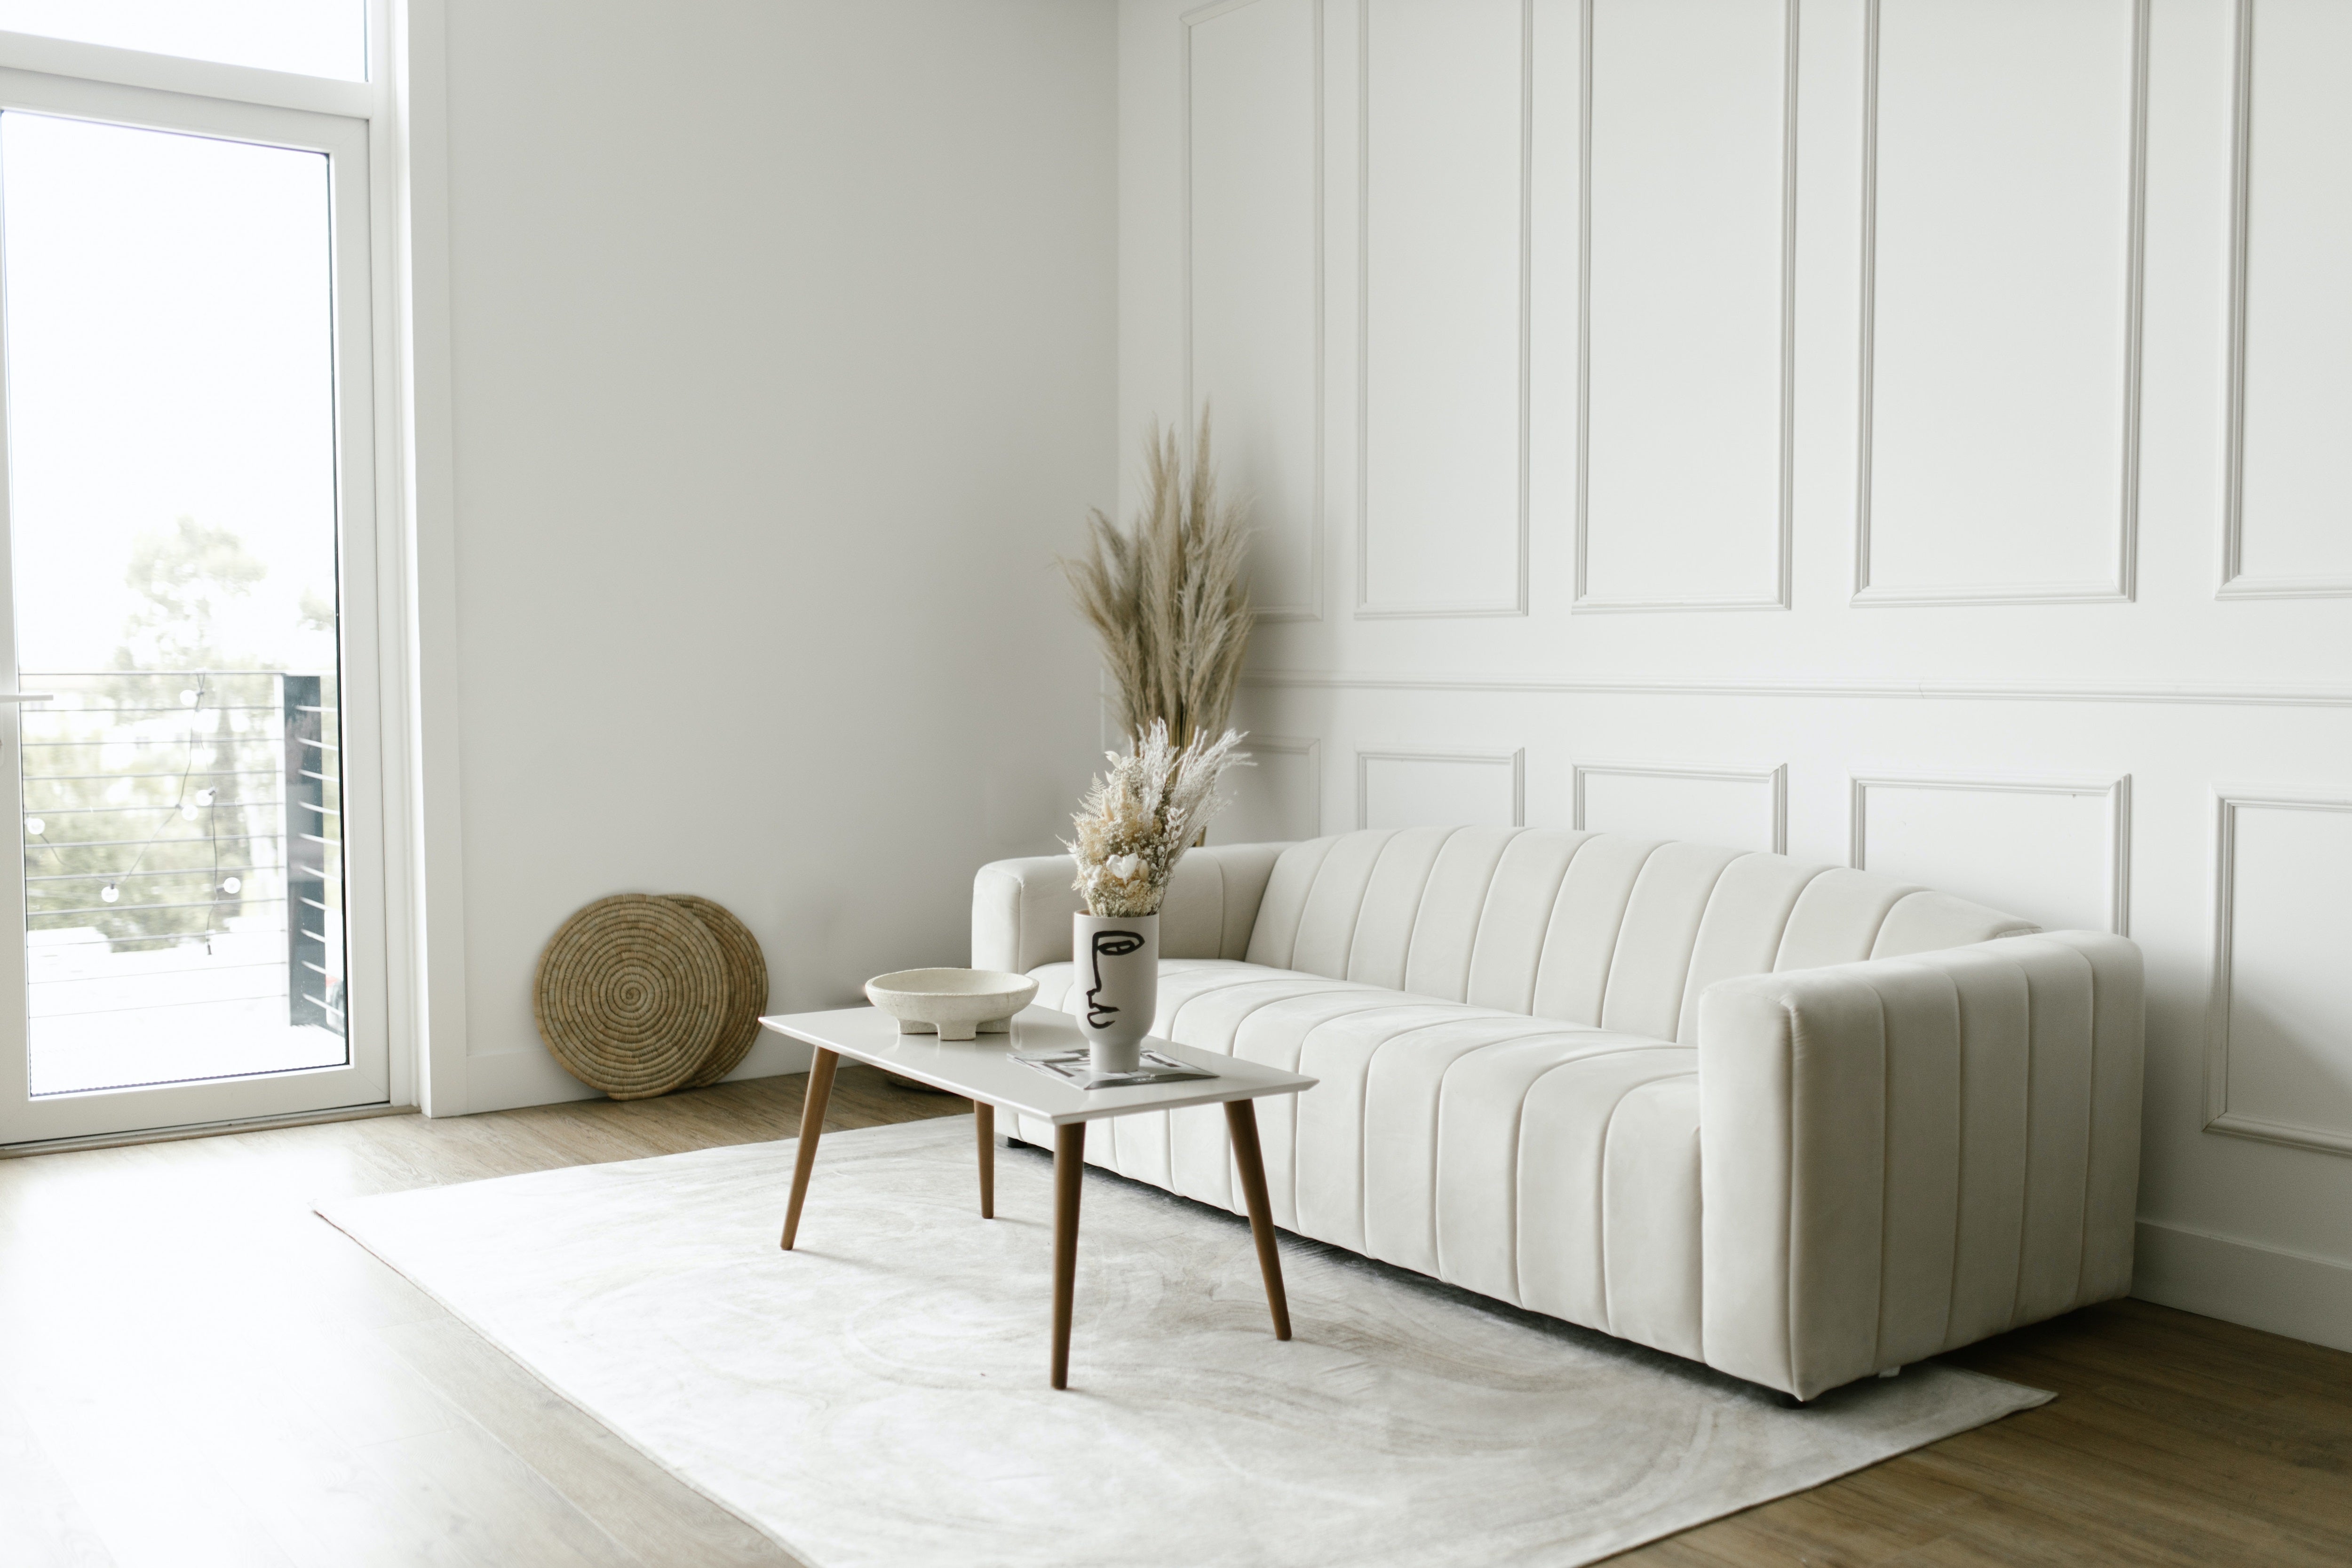 5 Best Industrial Sofa in 2023: Top Picks for Modern Homes